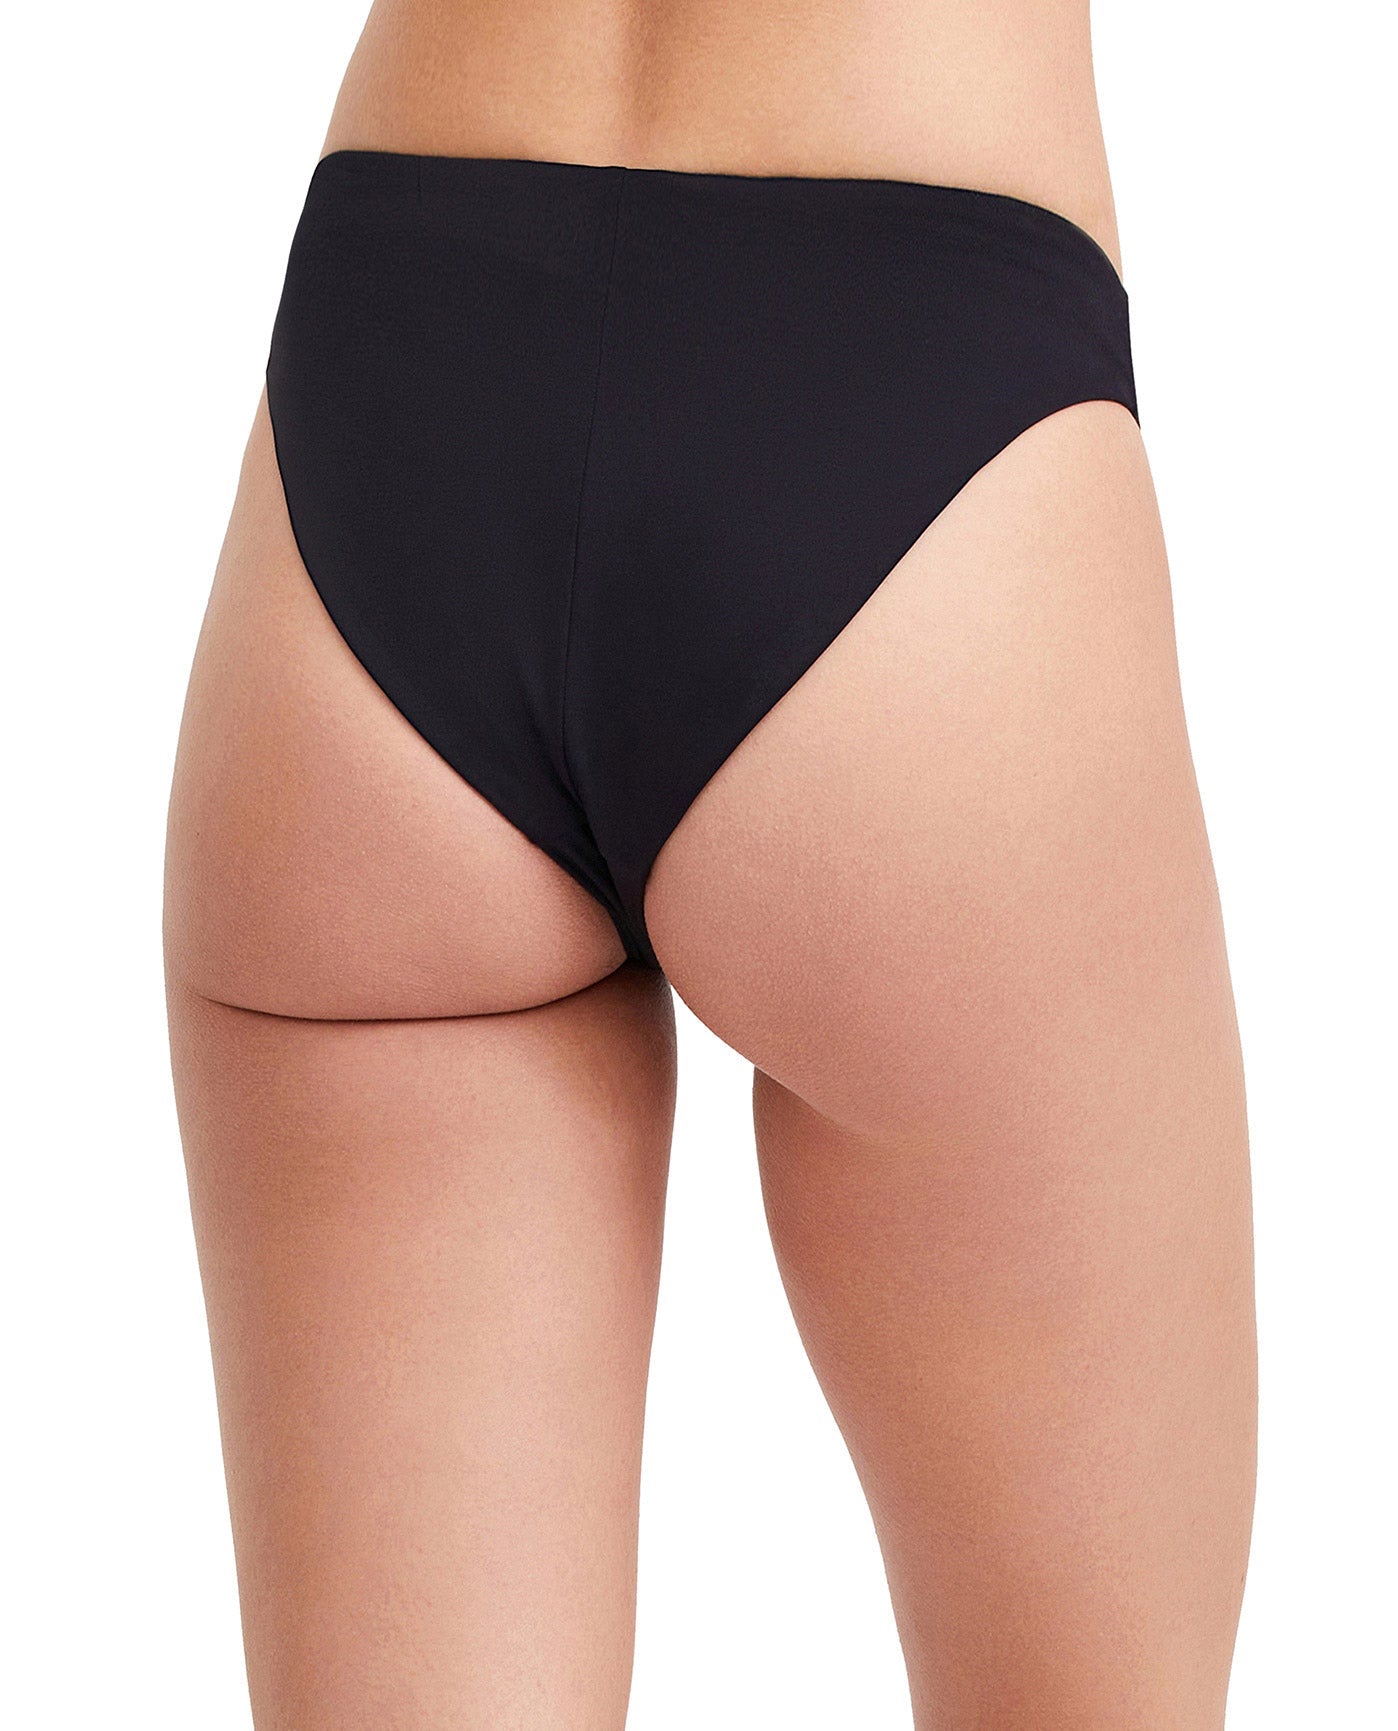 Back View Of Au Naturel Iman High Leg Bikini Bottom | AU NATUREL BLACK